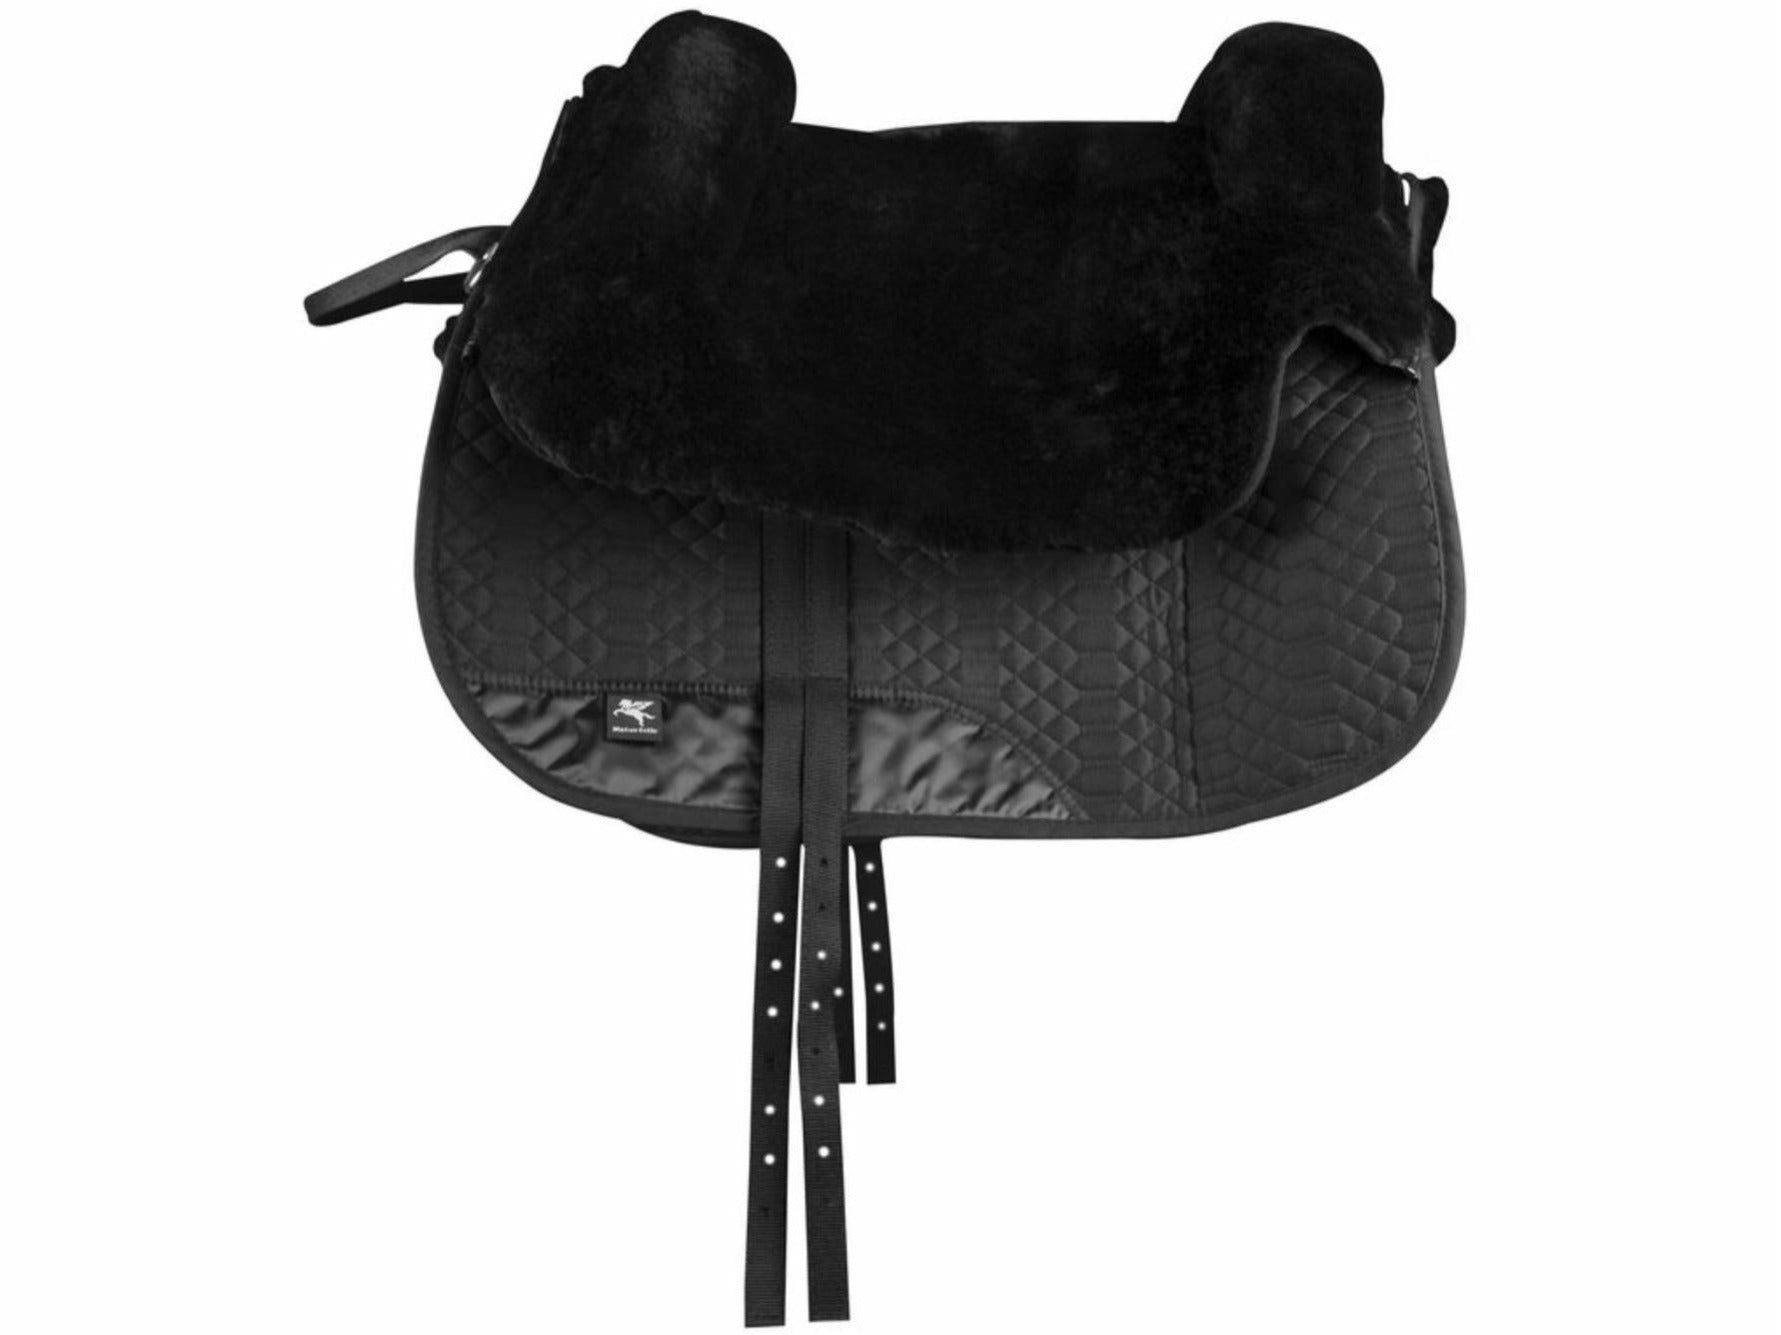 Engel - Fur saddle lambskin including spacer fabric